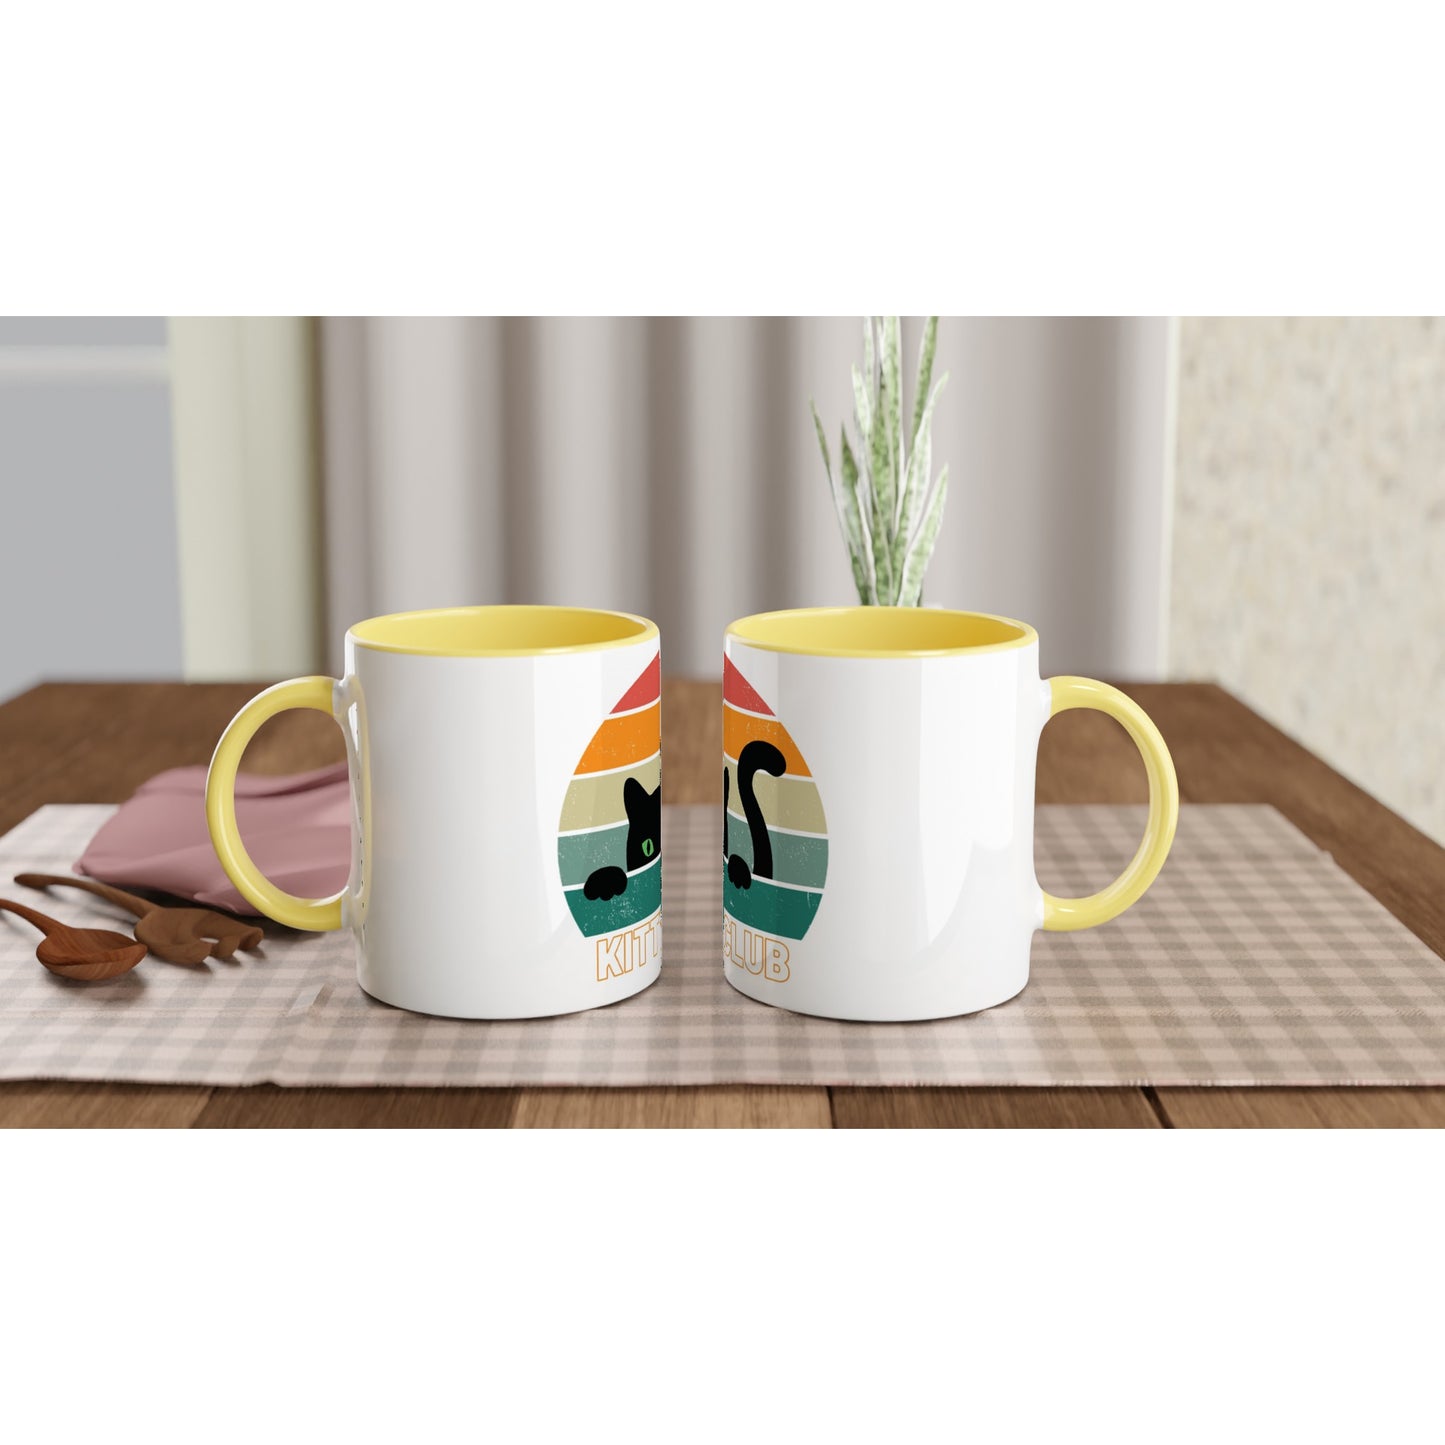 Kitty Club - White 11oz Ceramic Mug with Color Inside